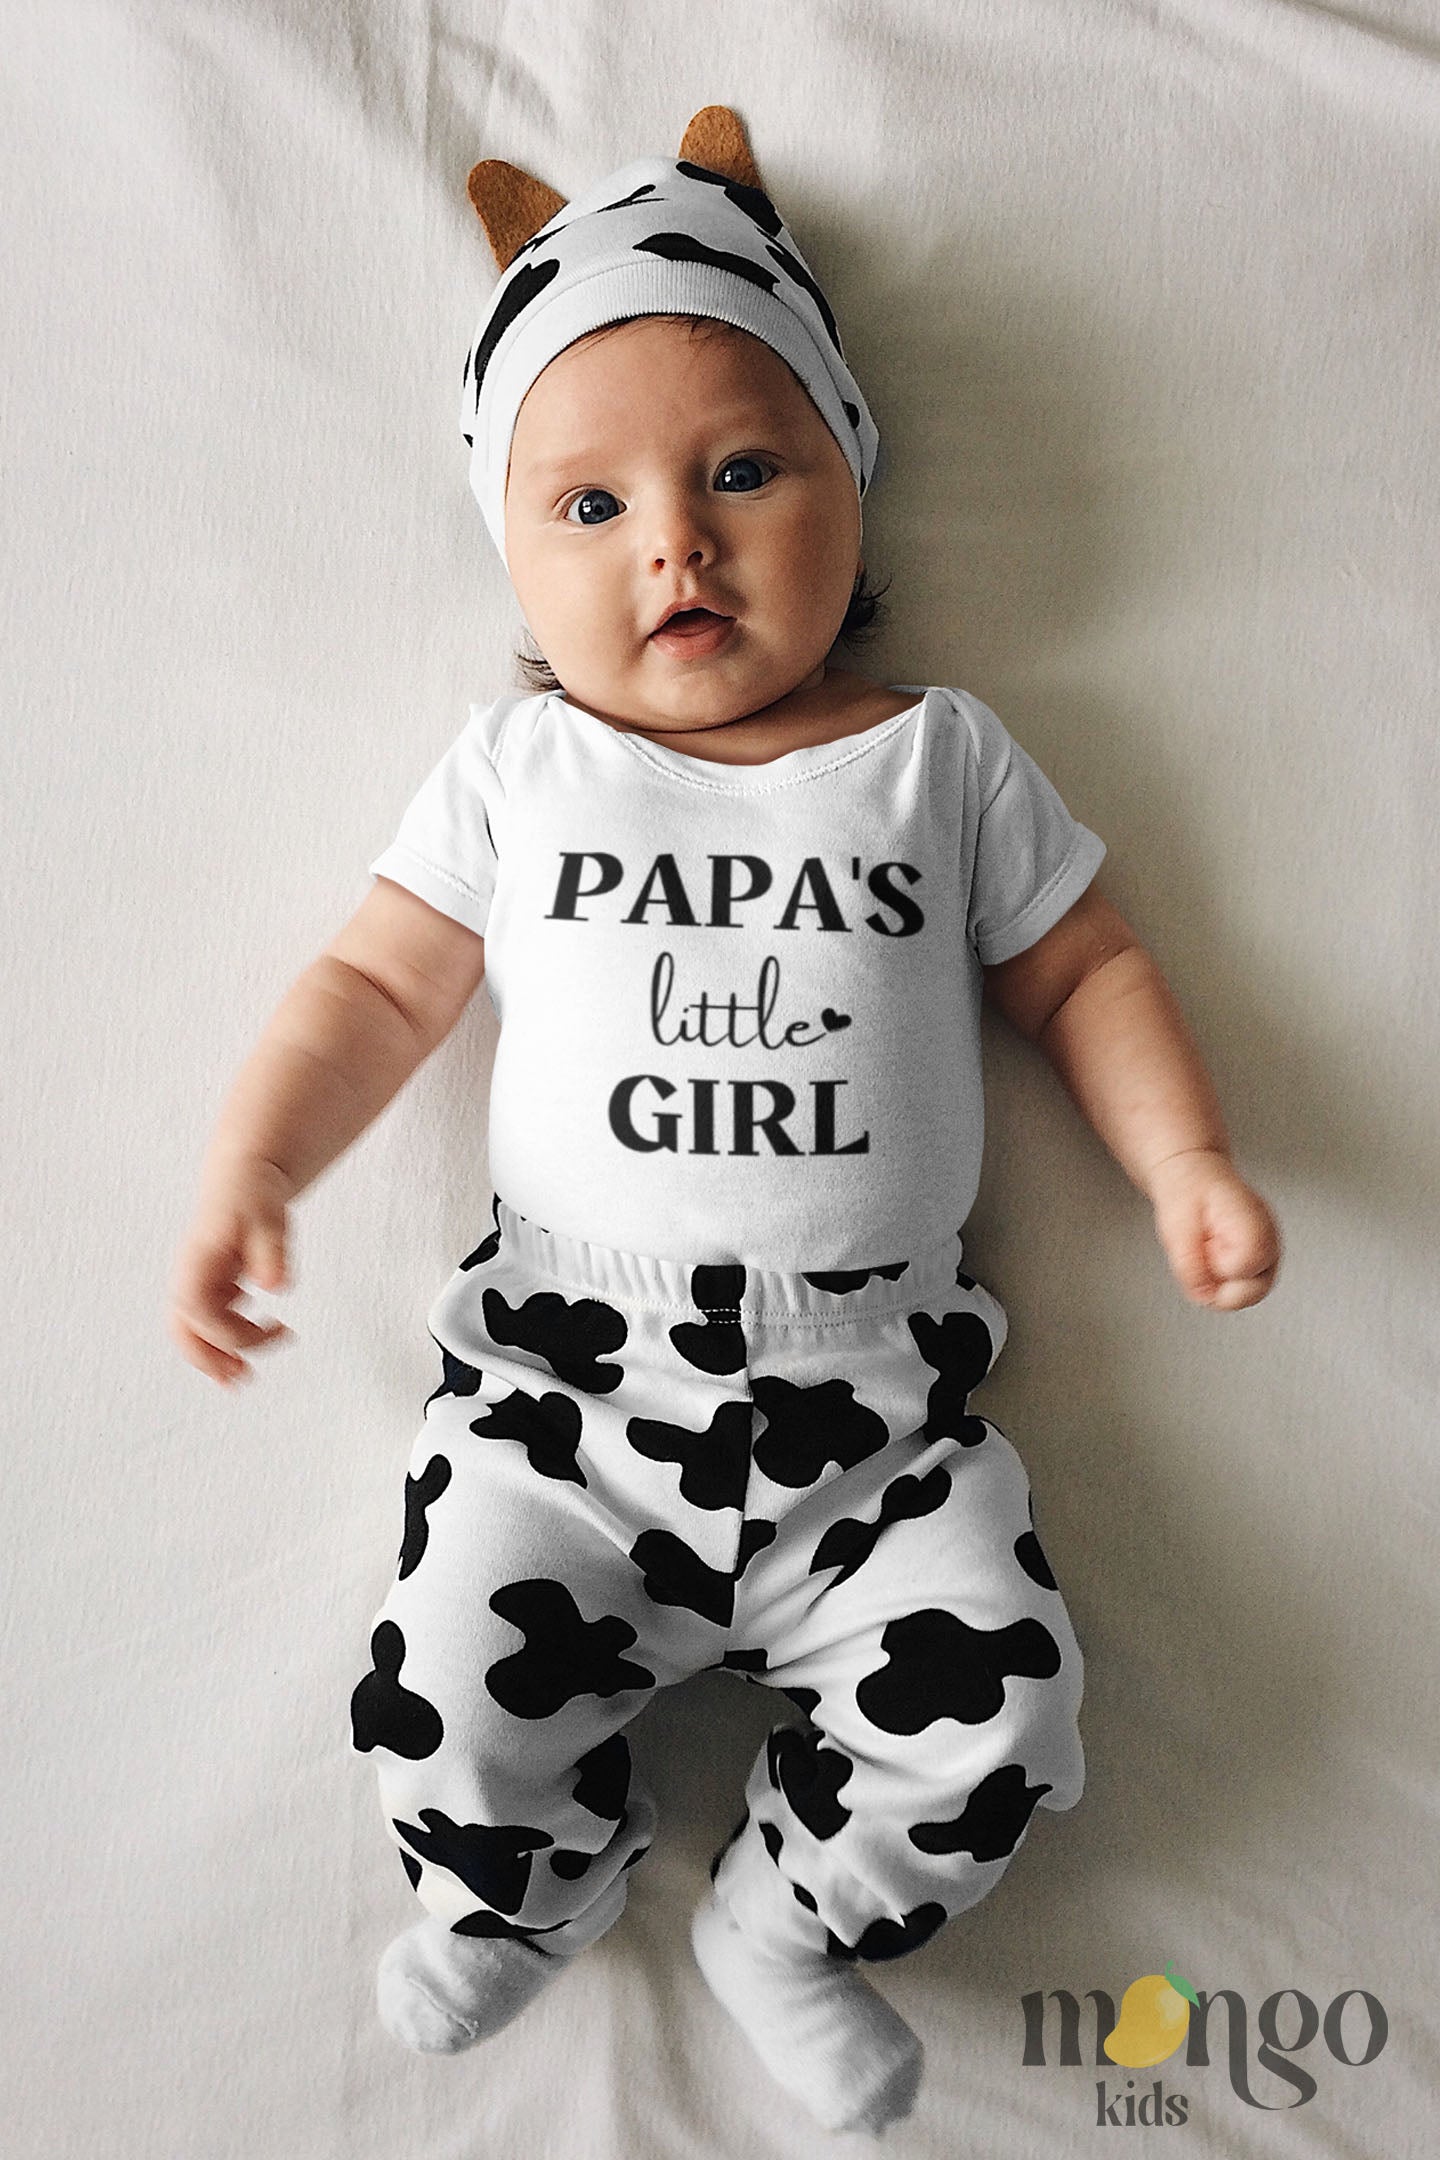 Papa's Little Girl Baby Onesie® Kids Shirt